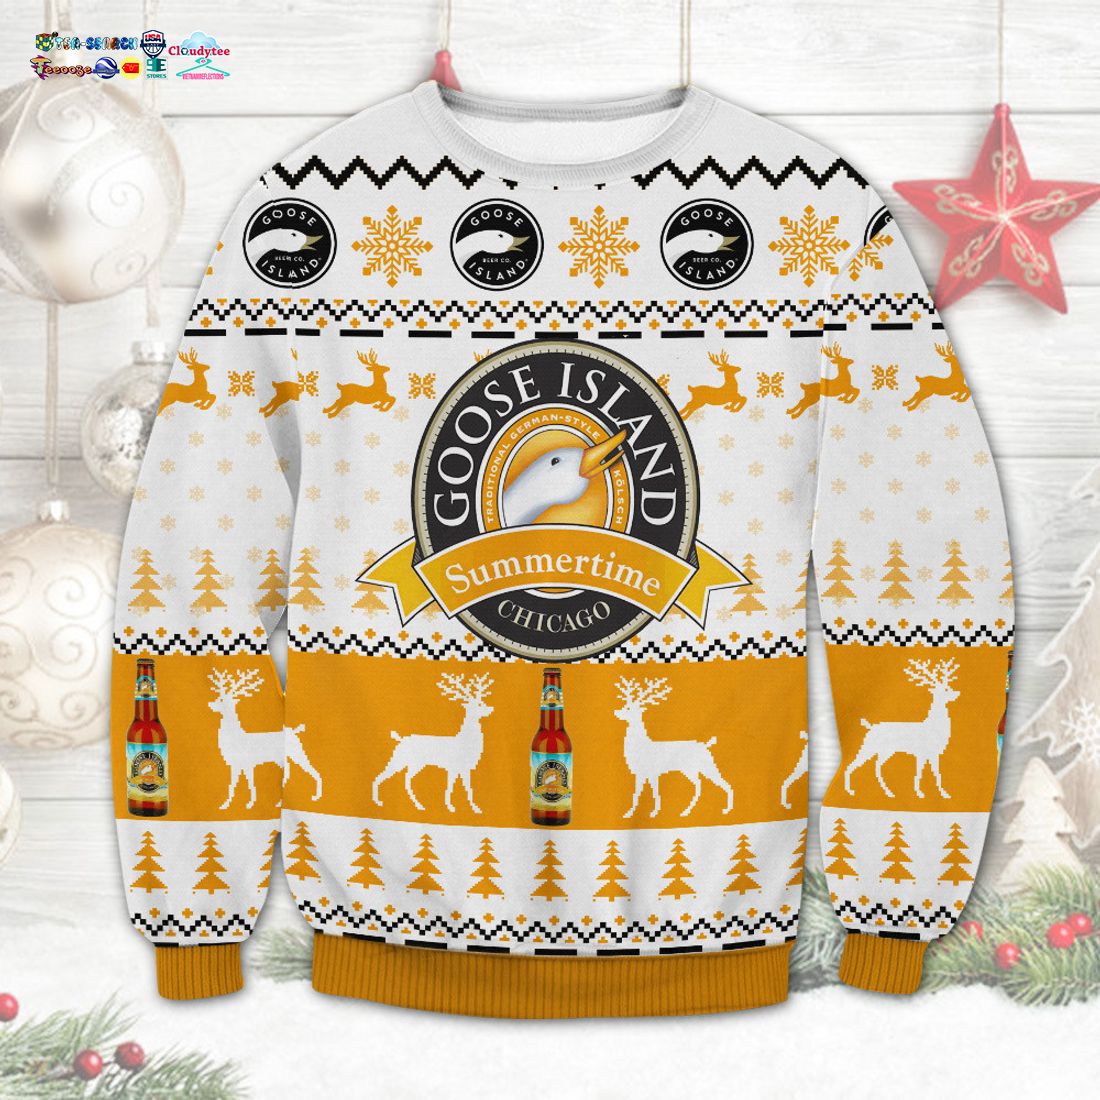 Goose Island Ver 2 Ugly Christmas Sweater - Nice bread, I like it